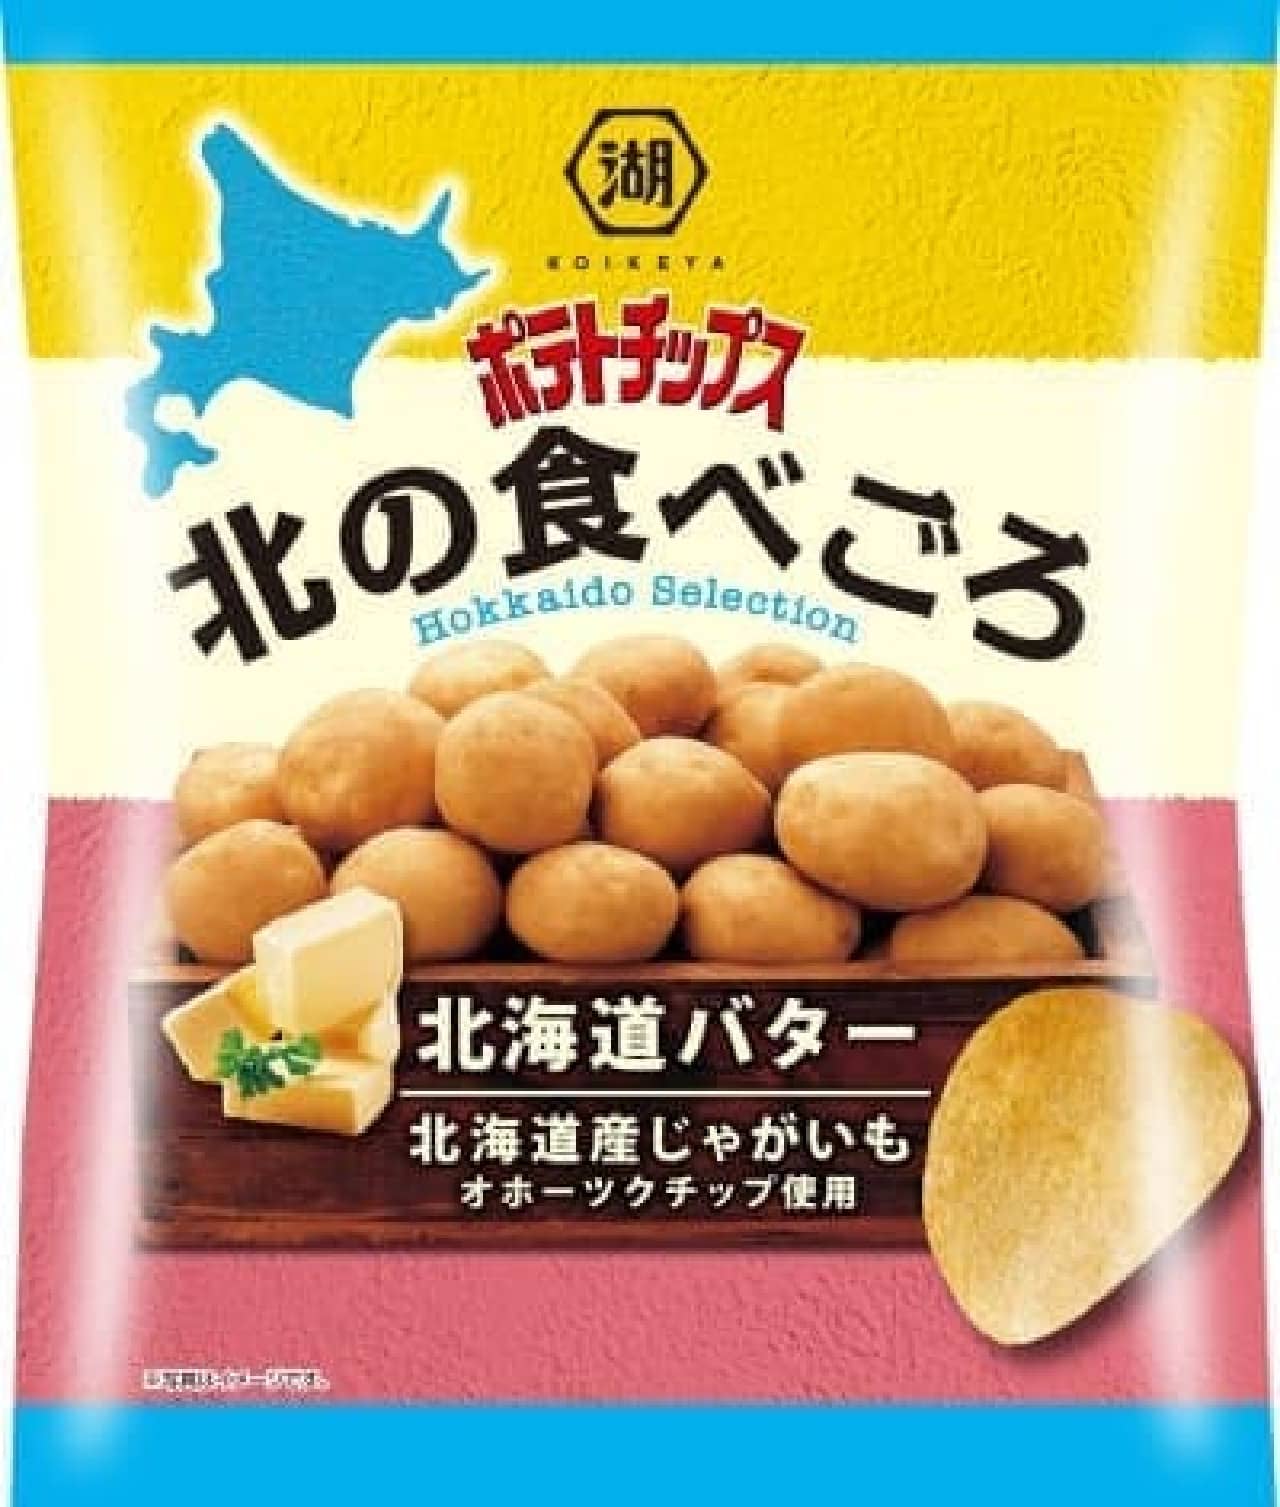 Koike-ya "Potato Chips North Eating Hokkaido Butter"